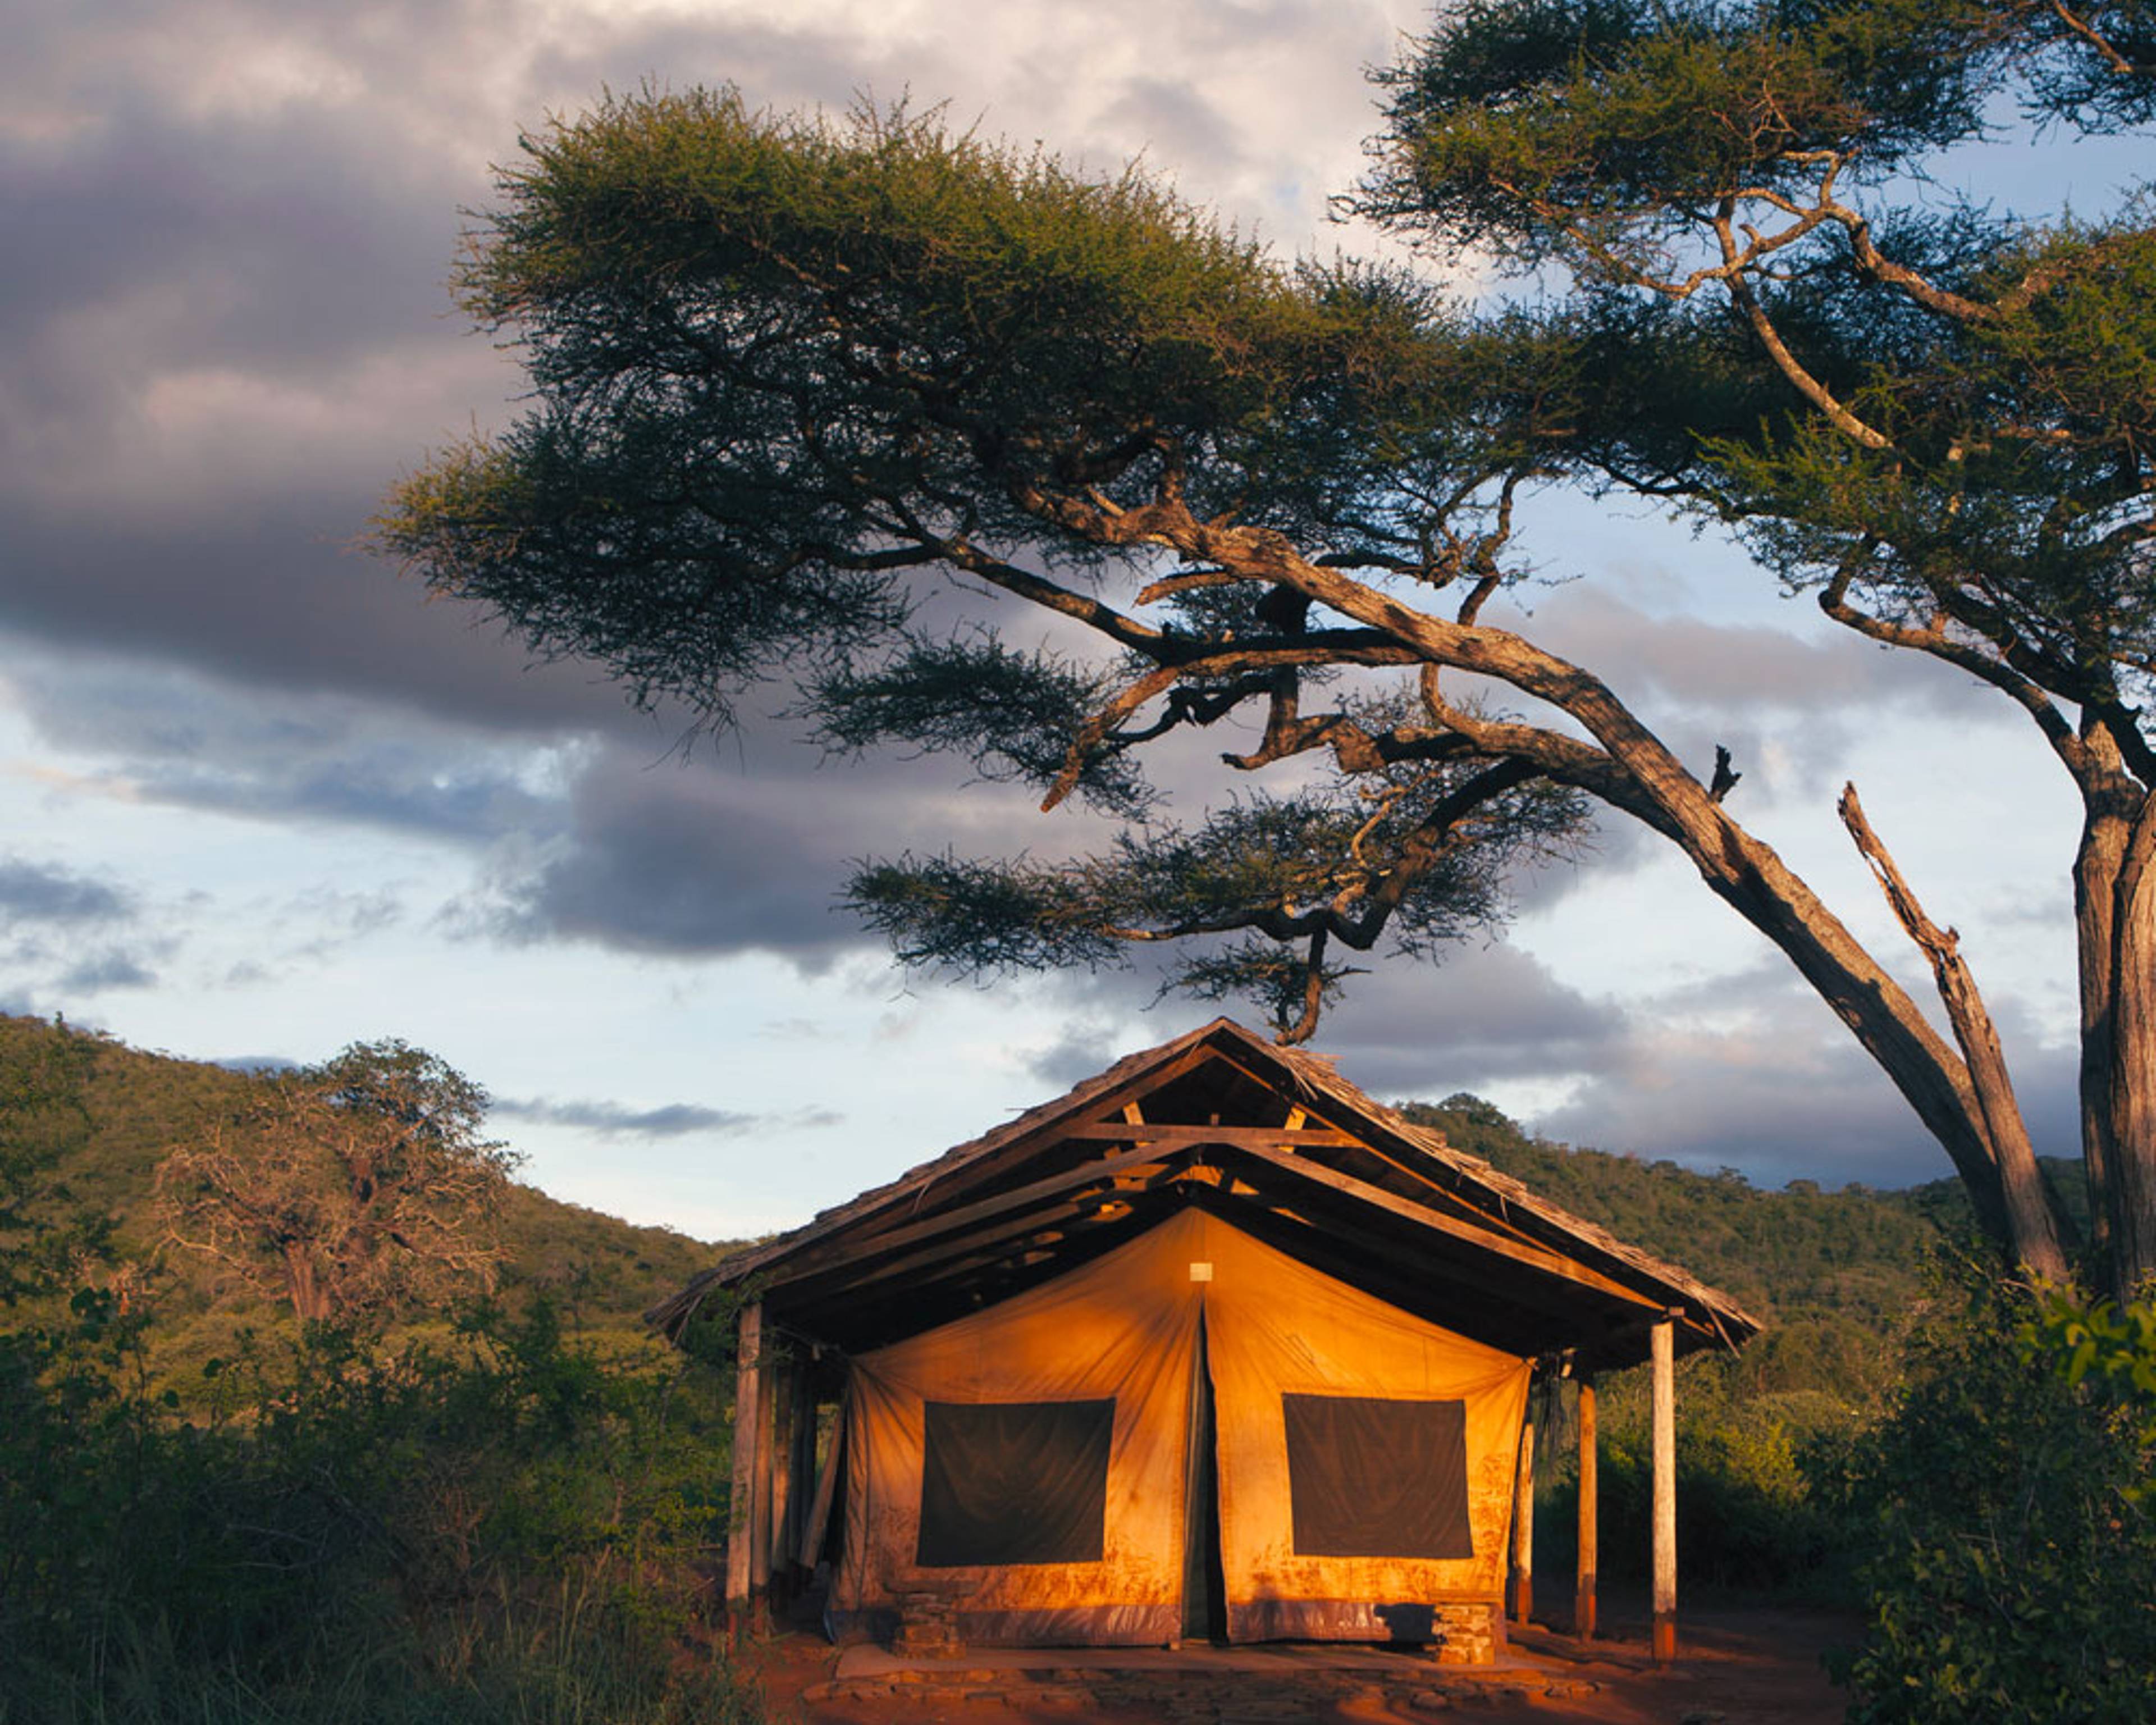 Viajes de naturaleza a Tanzania - Viajes a medida para disfrutar al aire libre